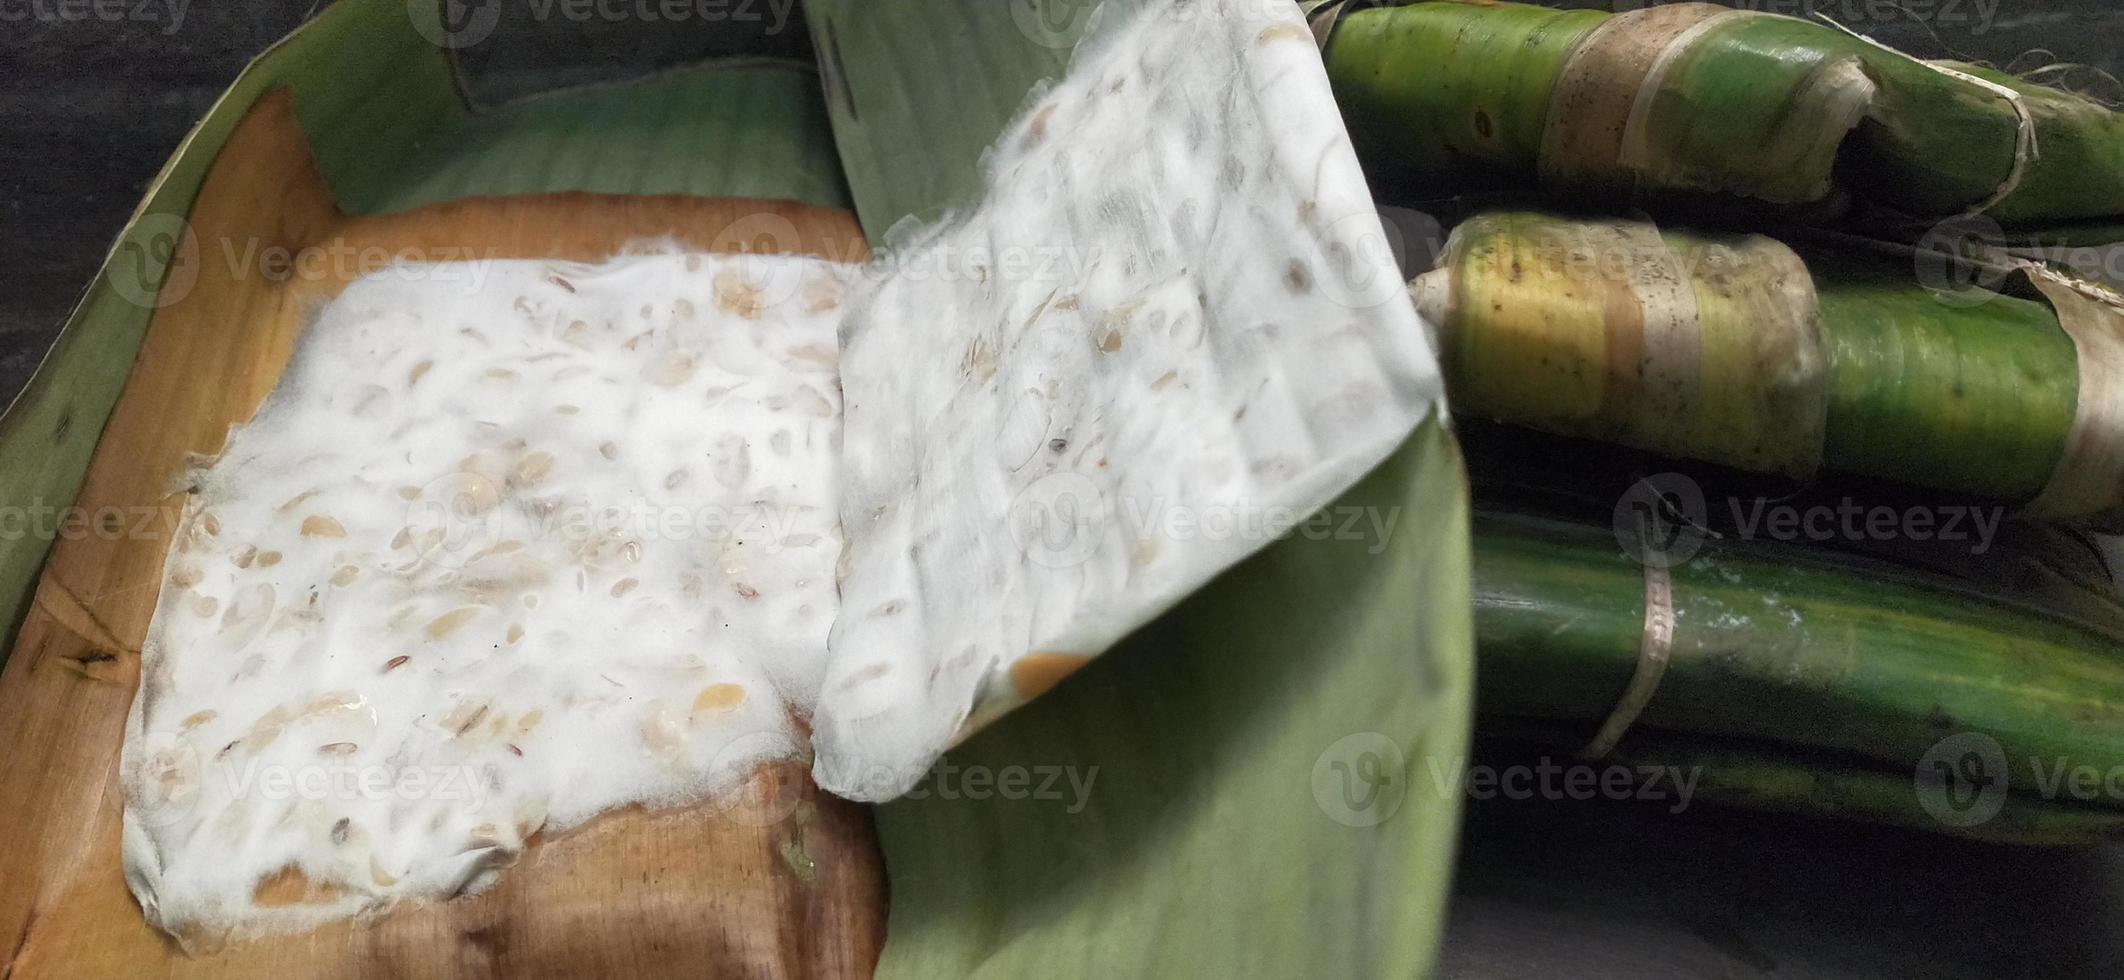 foto de comida tradicional tempe mendoan típica de banyumas, java central, indonésia